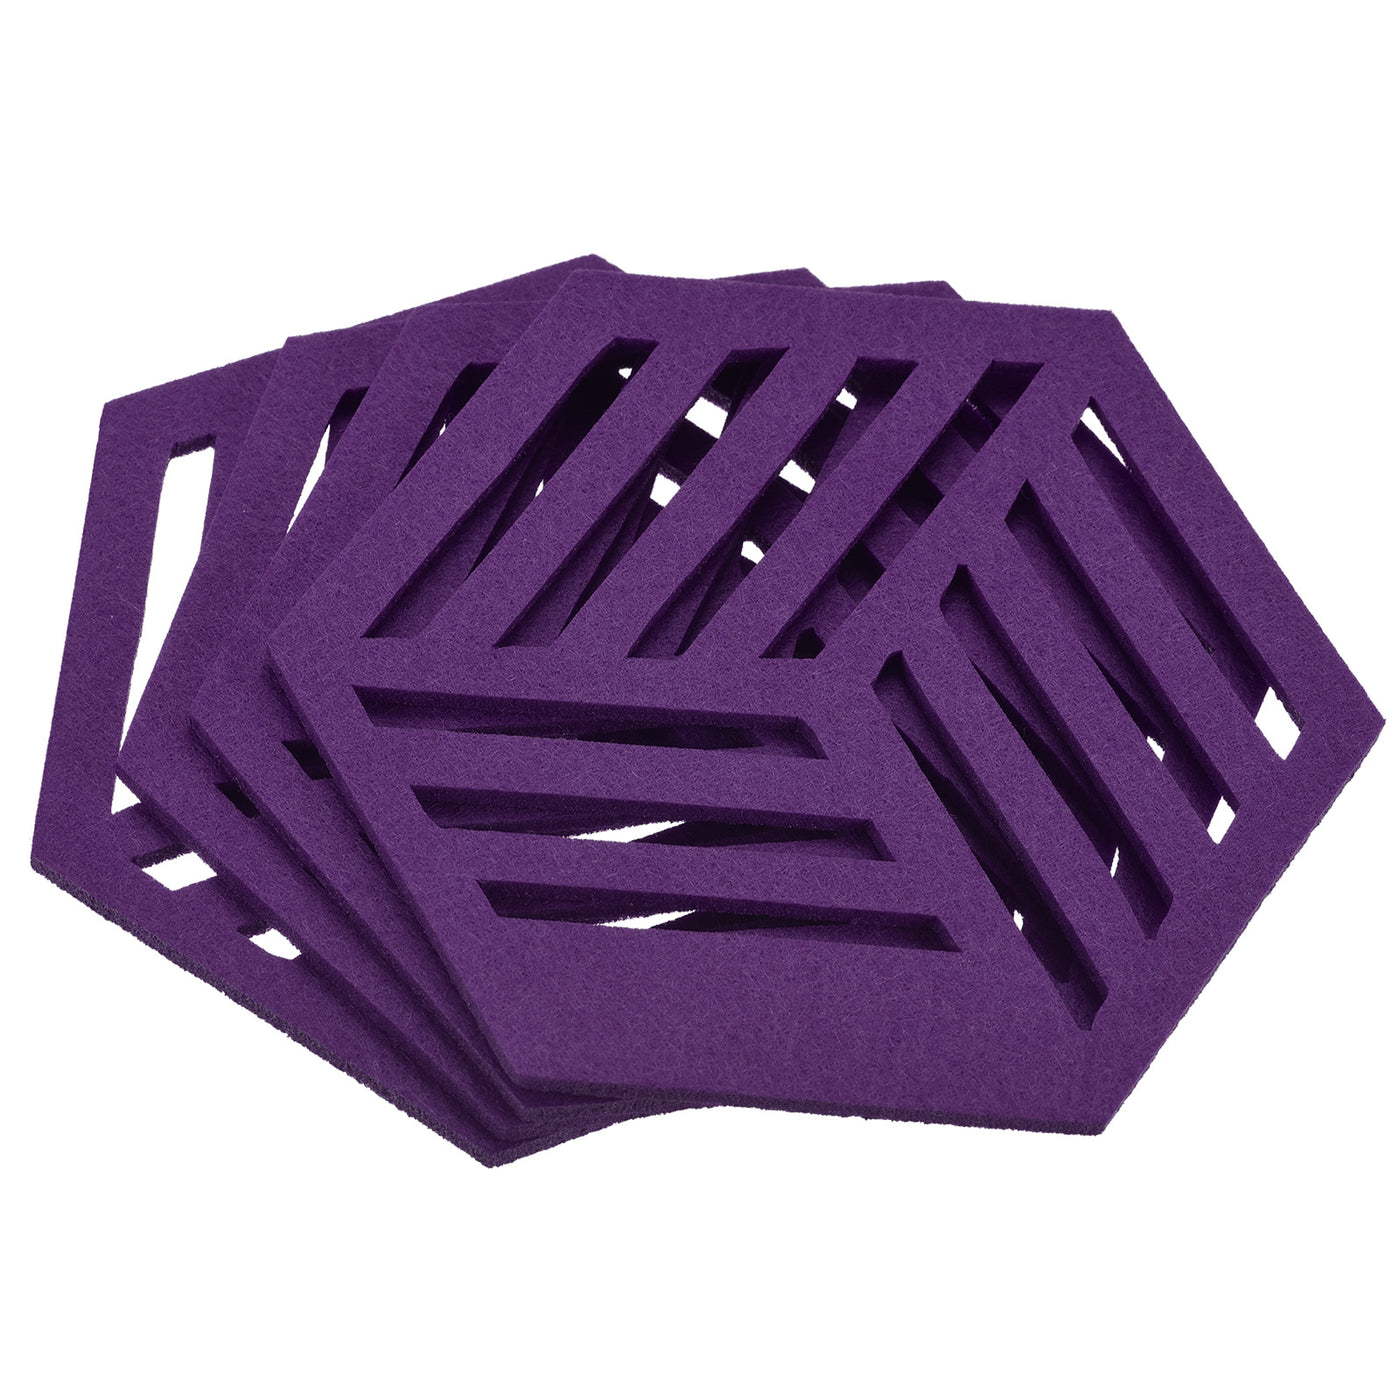 uxcell Uxcell Felt Coasters, 4pcs Hexagon Mat Pad Coaster for Drink Cup Pot Bowl Vase, Purple